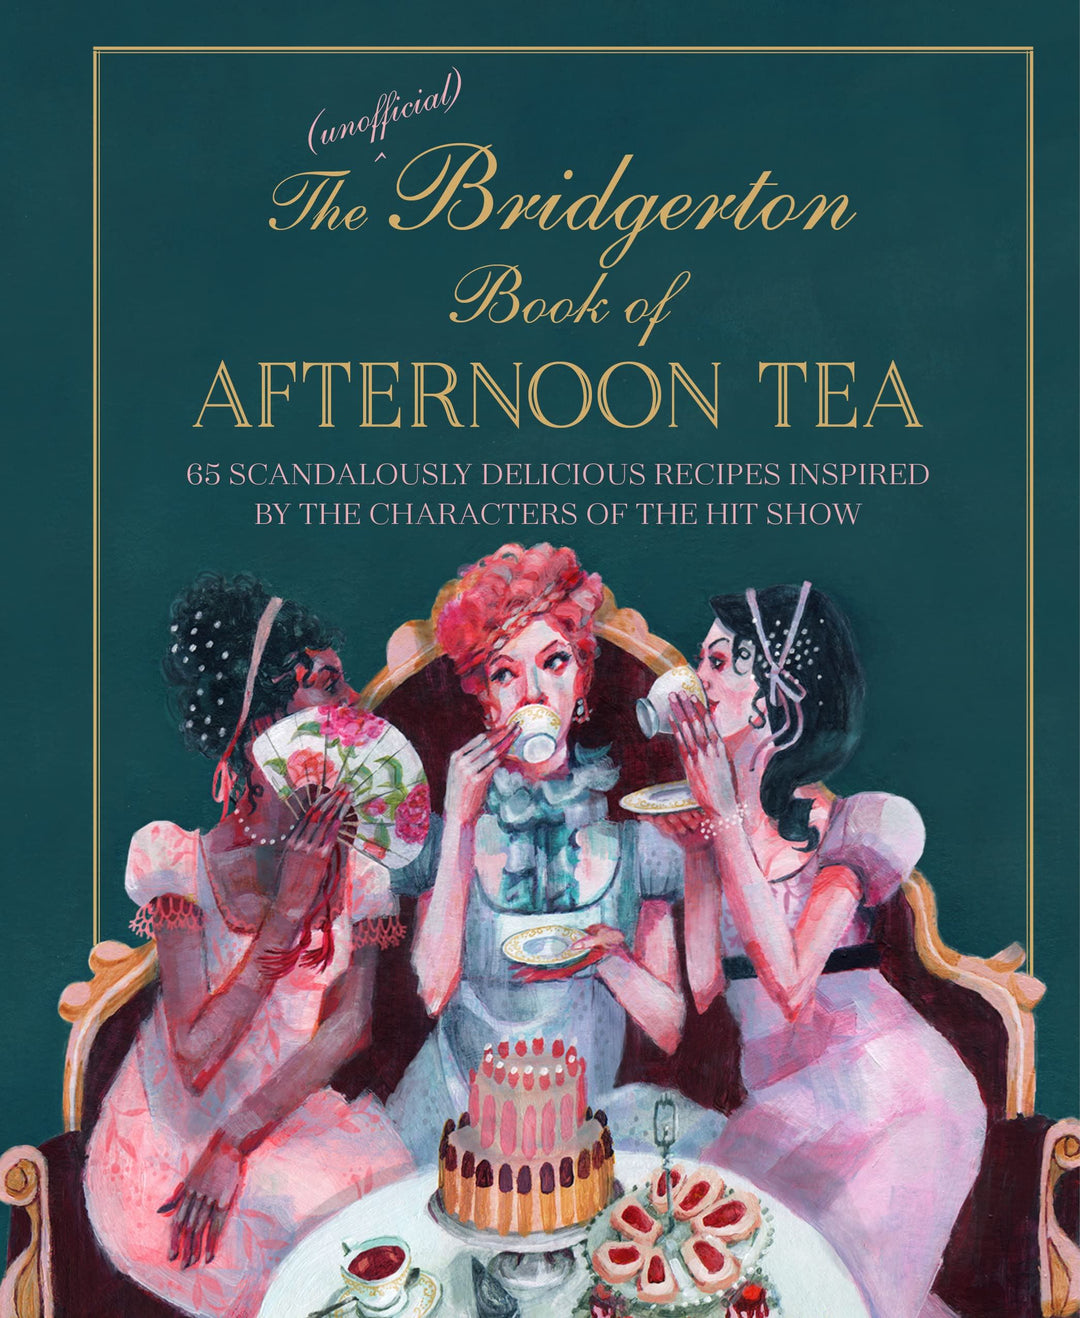 THE BRIDGERTON BOOK OF AFTERNOON TEA